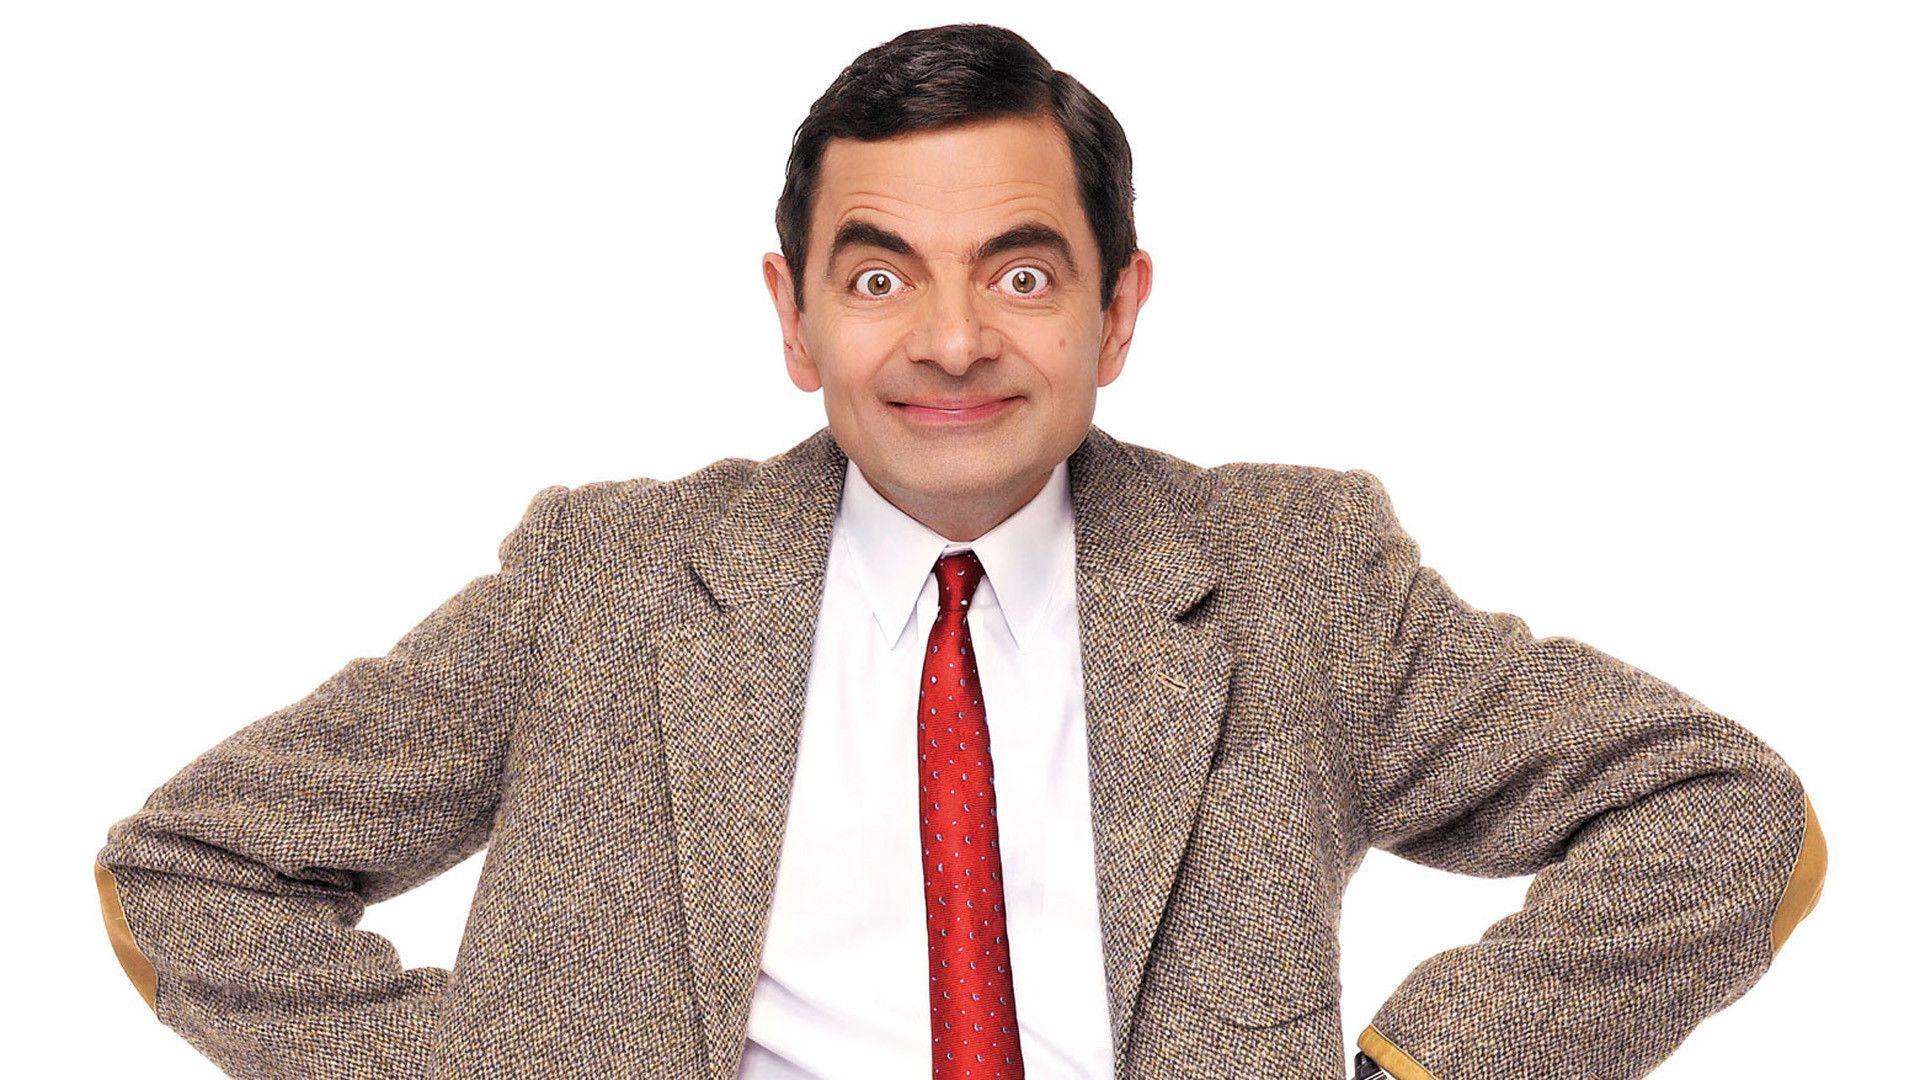 Rowan Atkinson as Mr. Bean | Mr bean, Best movies list, Best tv